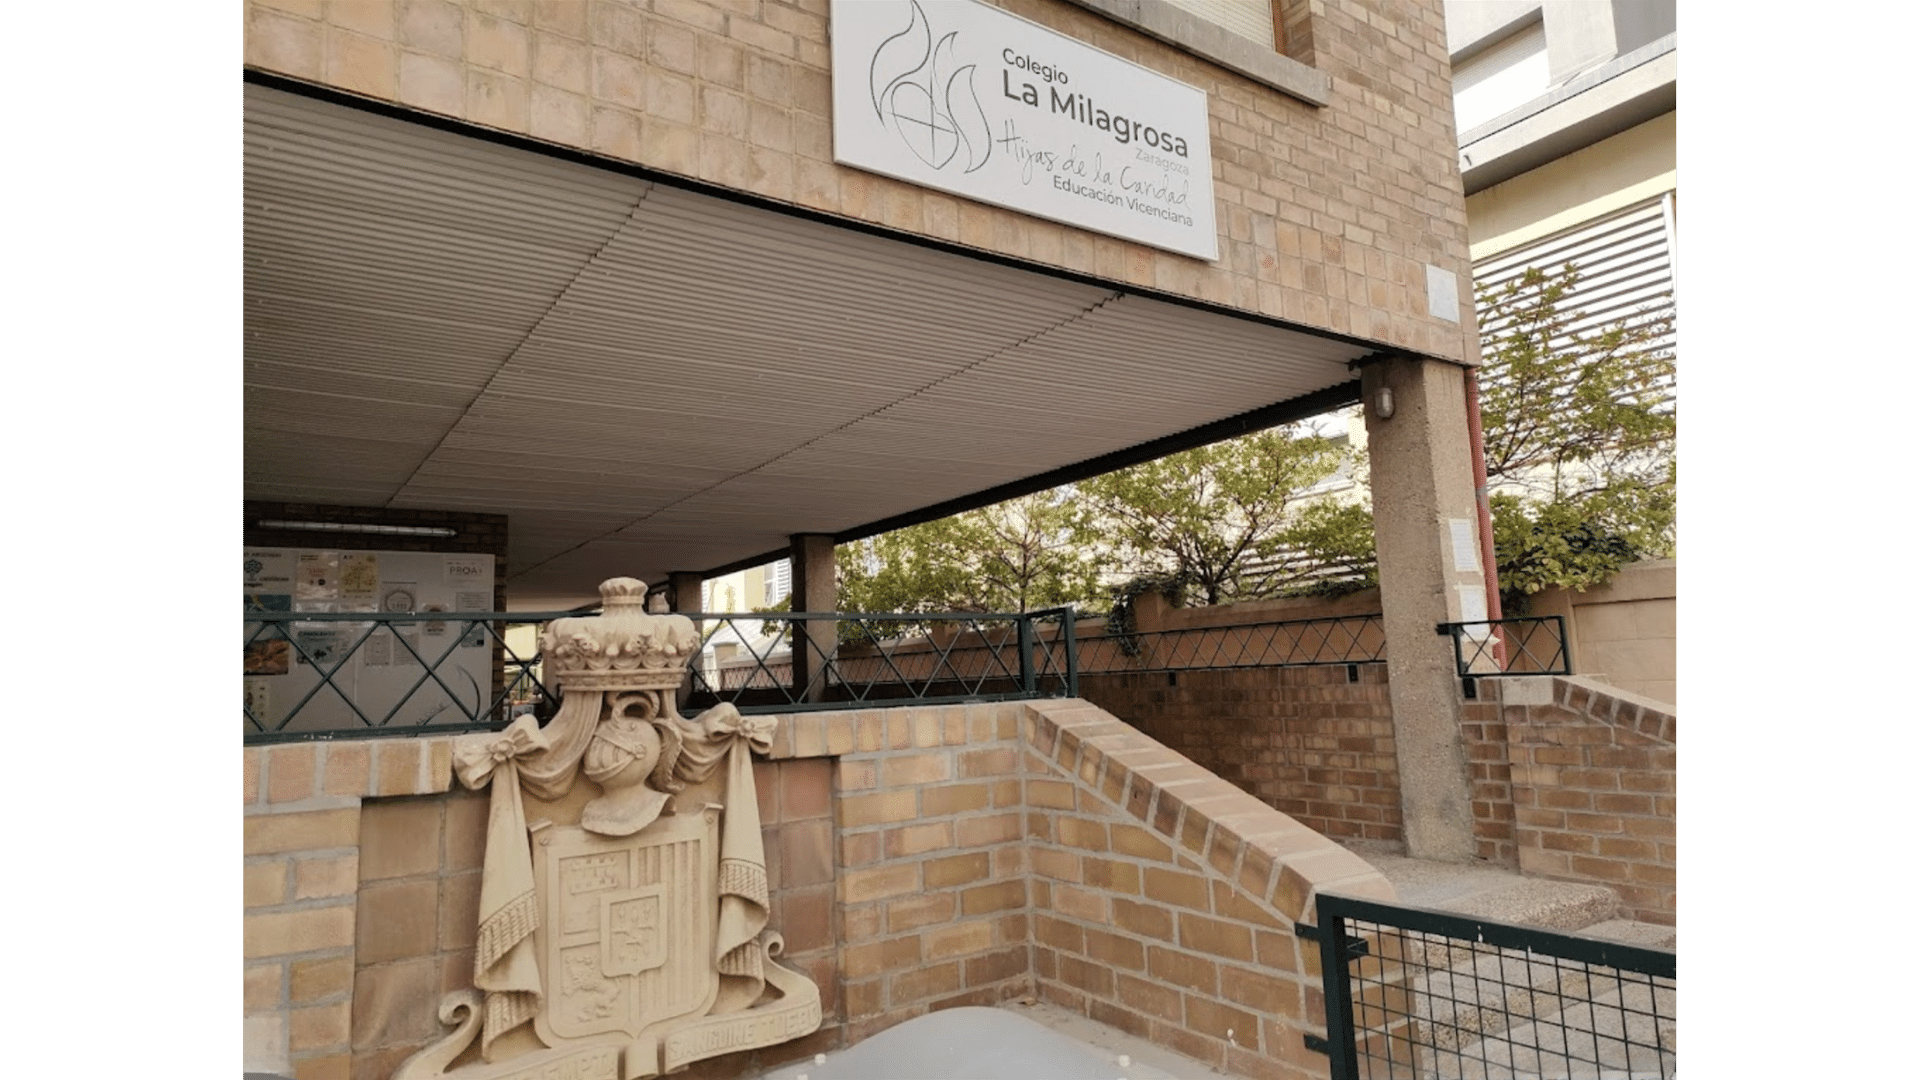 Colegio La Milagrosa de Zaragoza